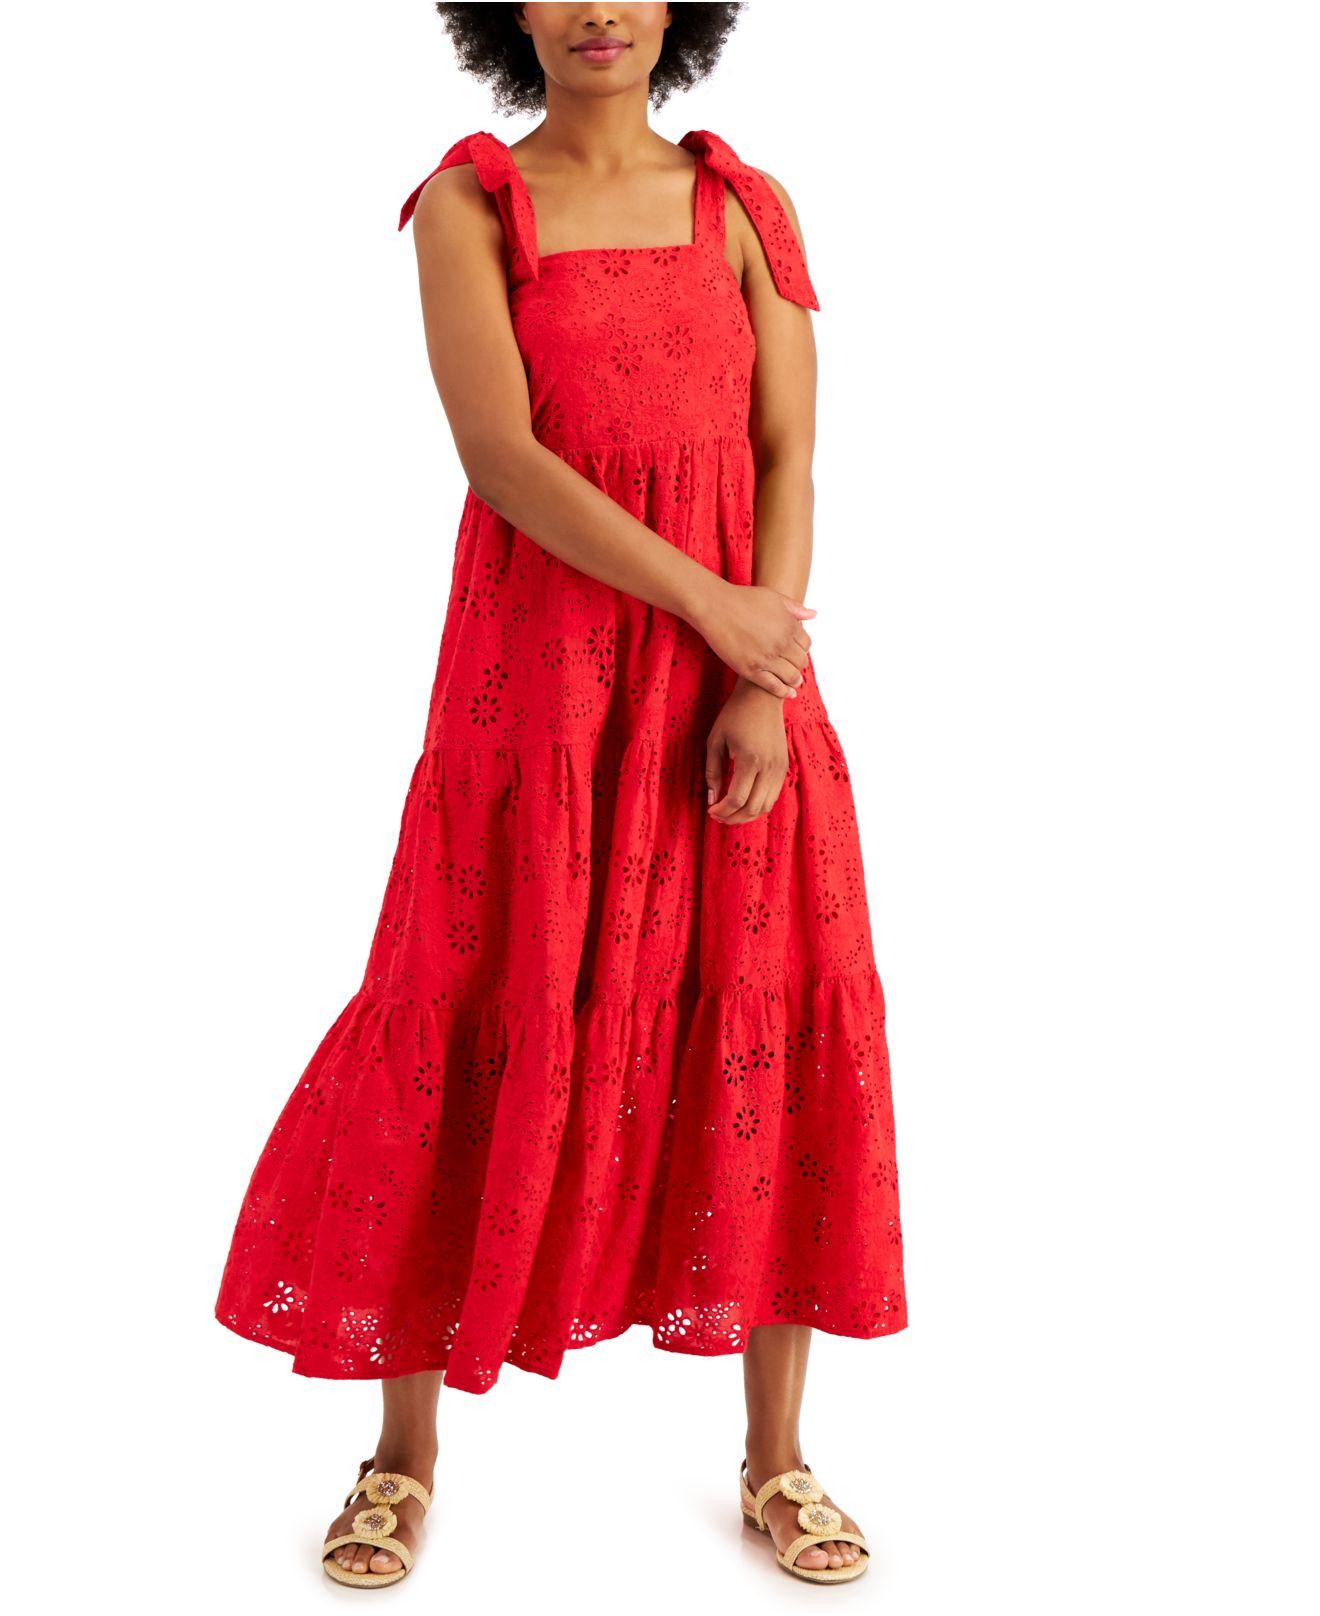 macys red dresses